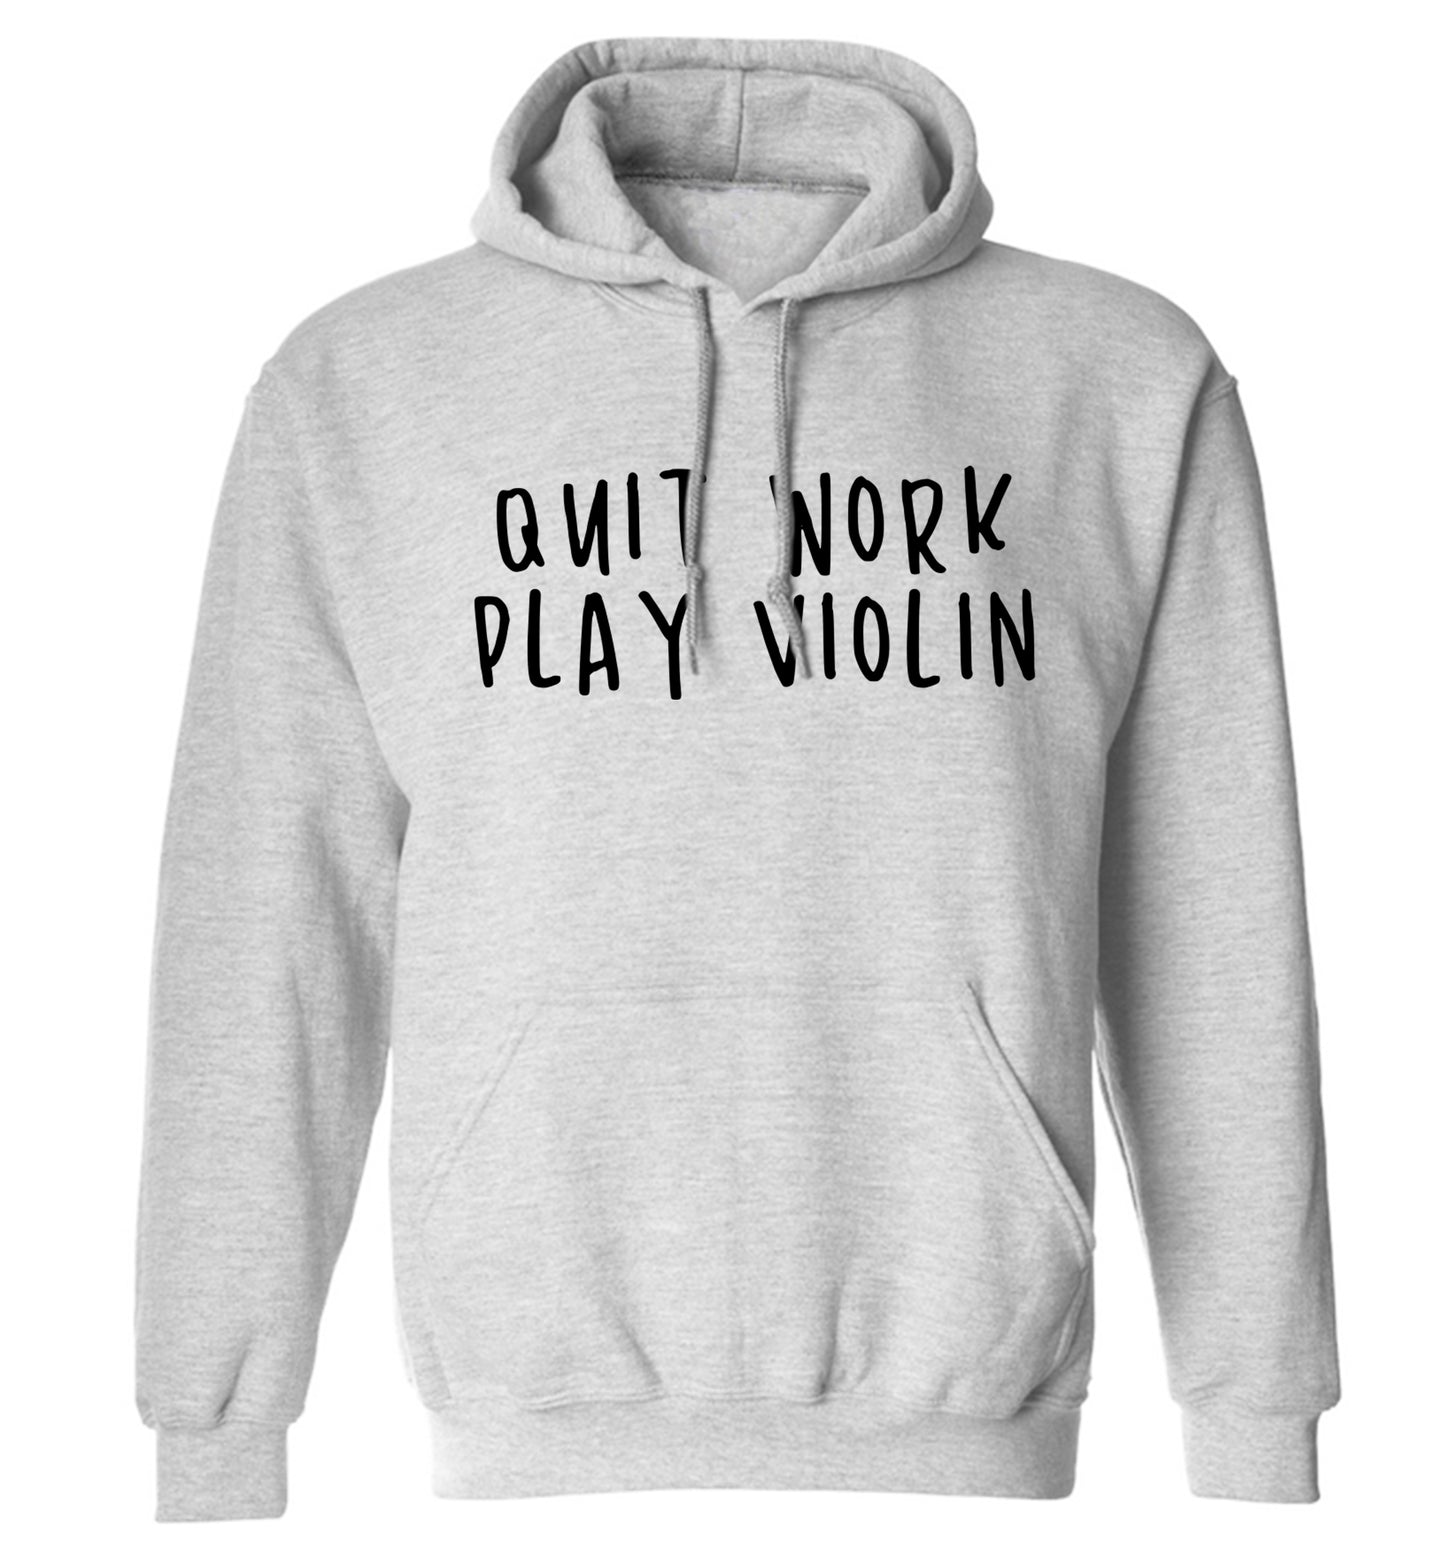 Quit work play violin adults unisex grey hoodie 2XL